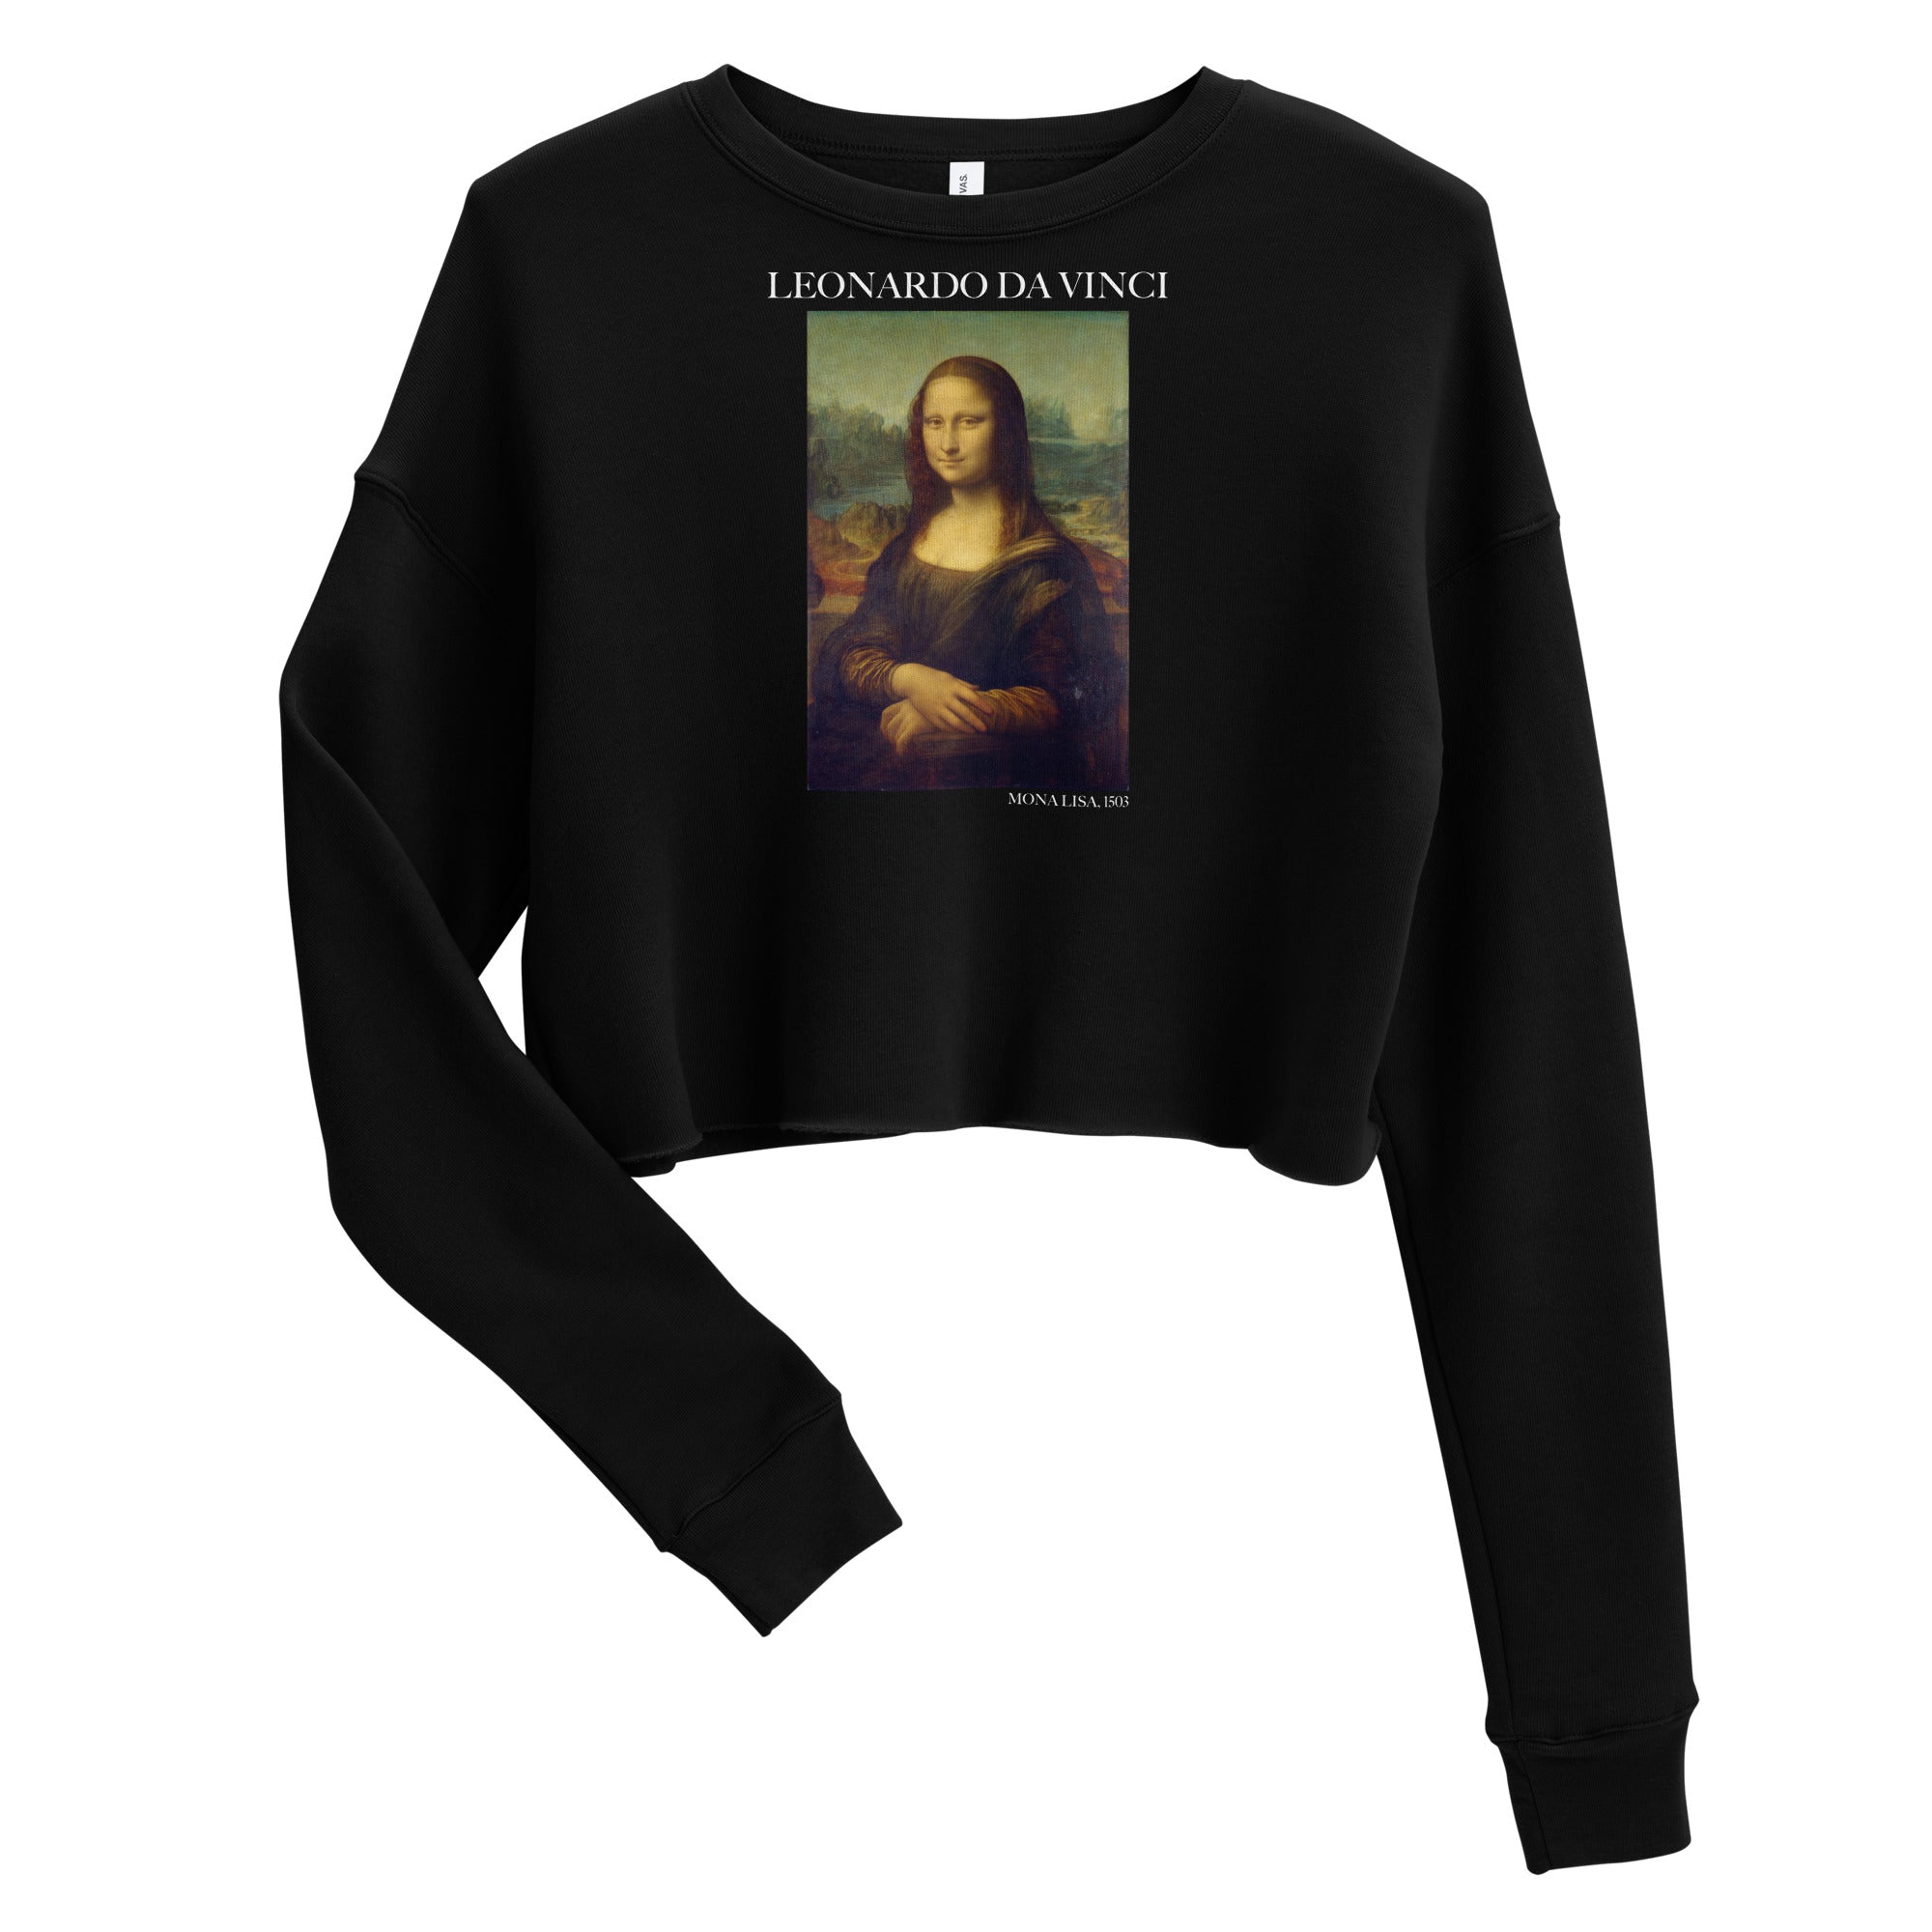 Leonardo da Vinci 'Mona Lisa' Famous Painting Cropped Sweatshirt | Premium Art Cropped Sweatshirt